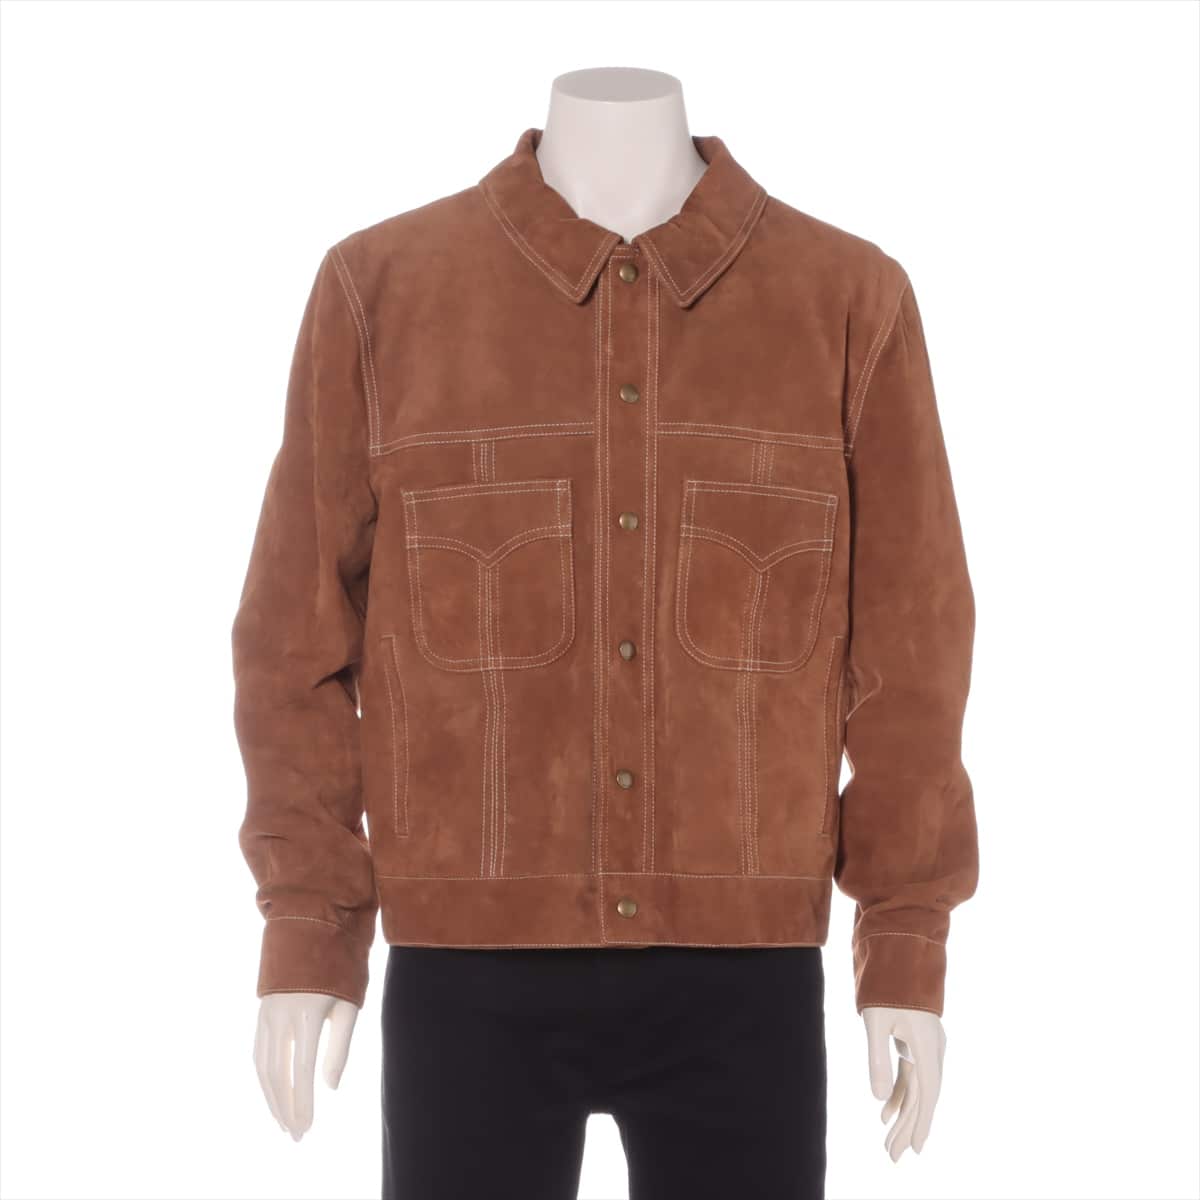 CELINE 20AW Suede Leather jacket 54 Men's Camel  Seventies trucker jacket